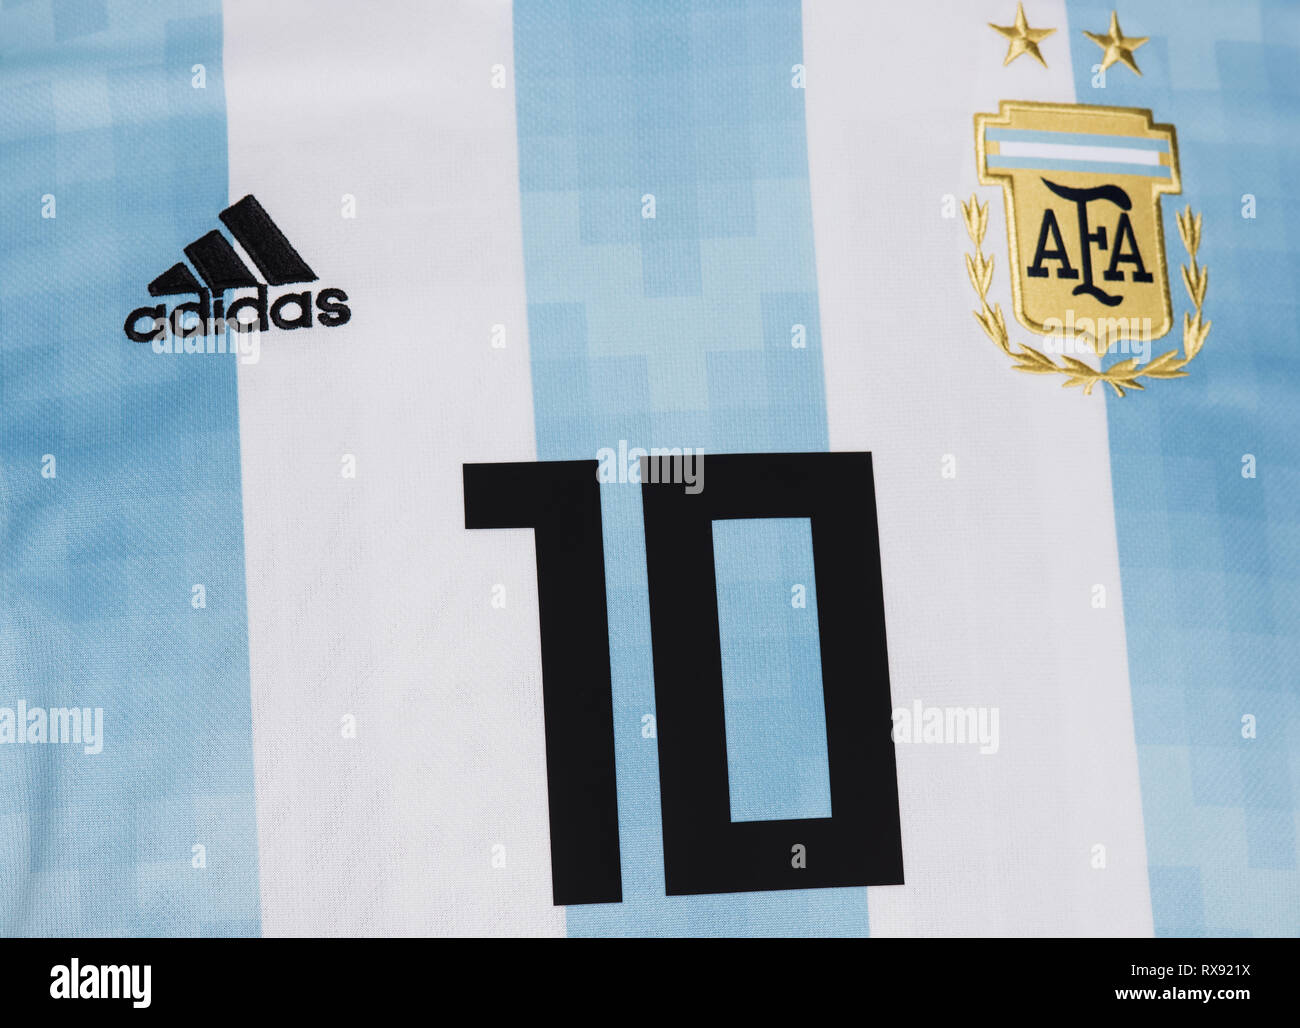 argentina national football team jersey